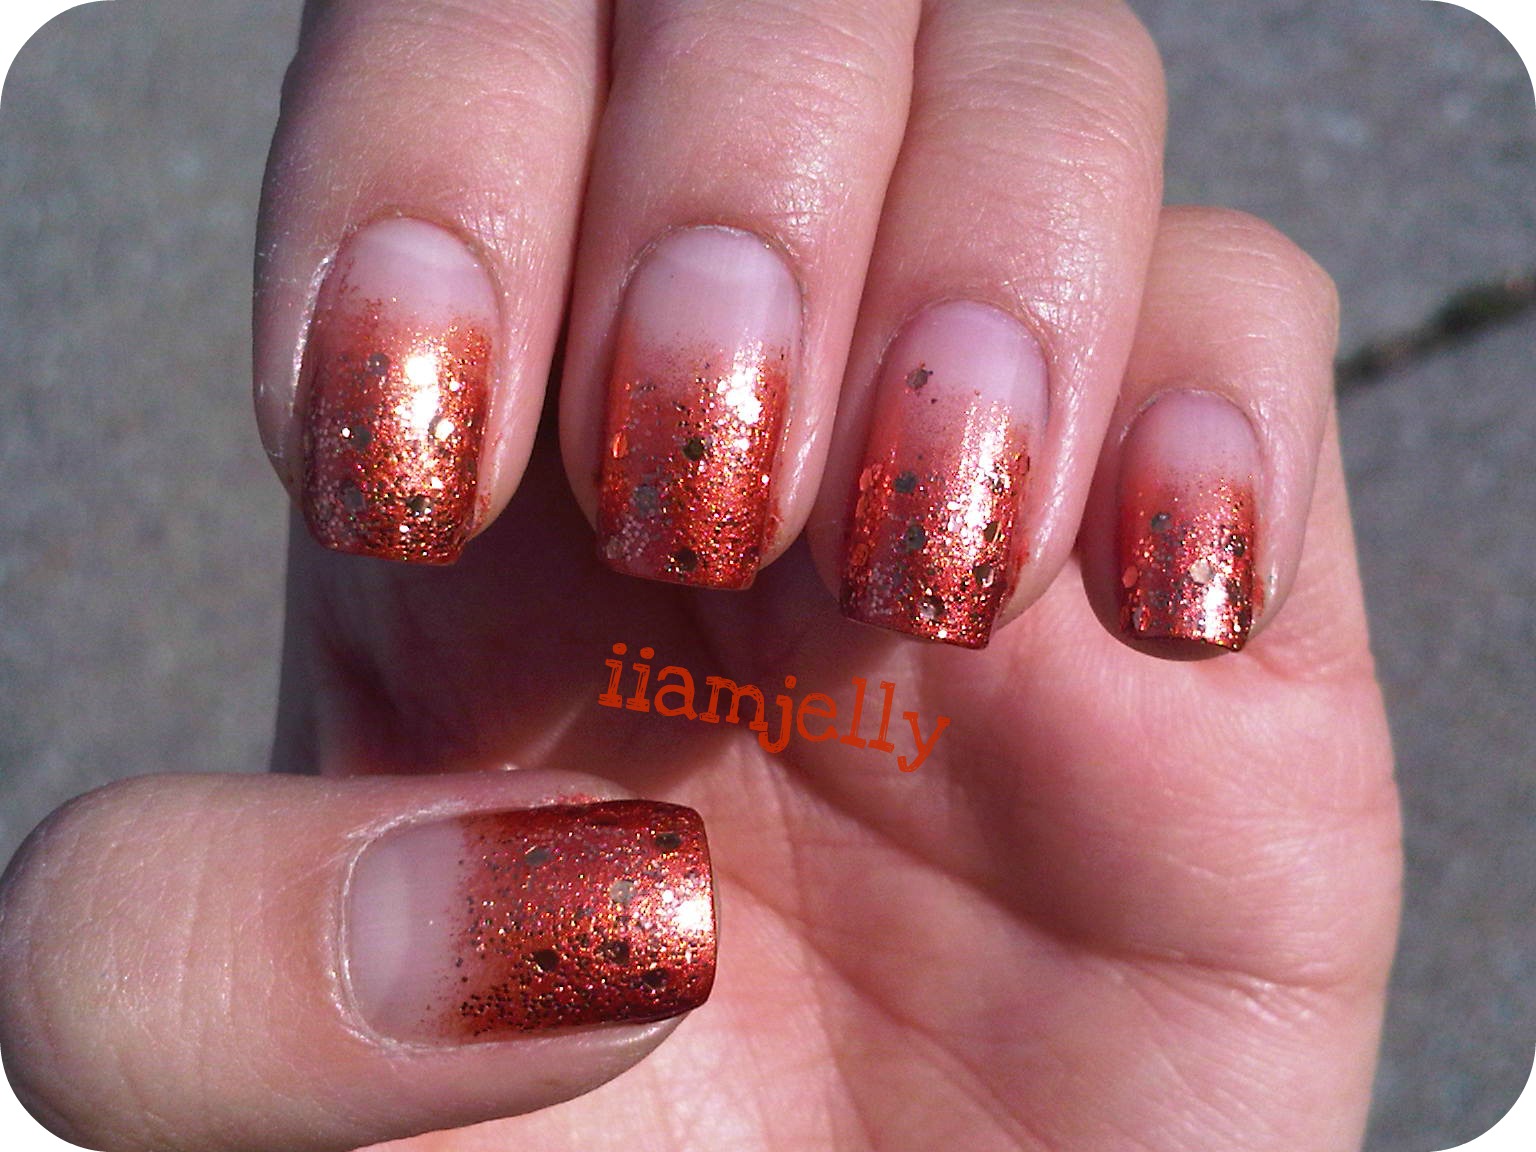 Jelly's Nails Copper Glitter Gradient Nails!